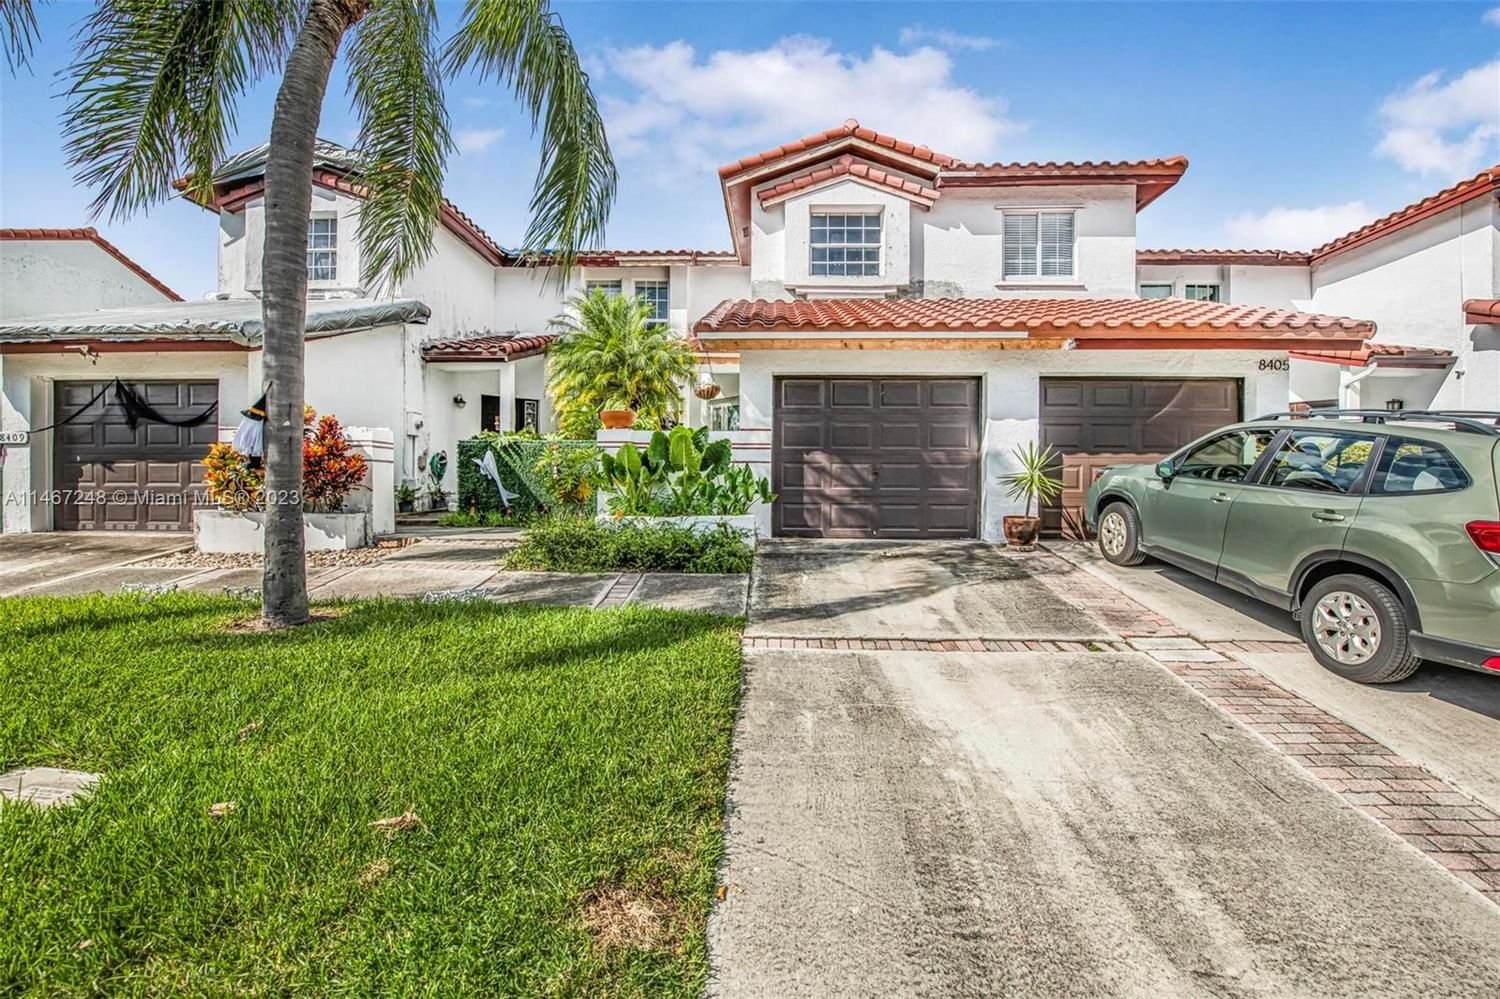 Real estate property located at 8407 208th Ter, Miami-Dade County, SAGA BAY TOWNHOMES, Cutler Bay, FL